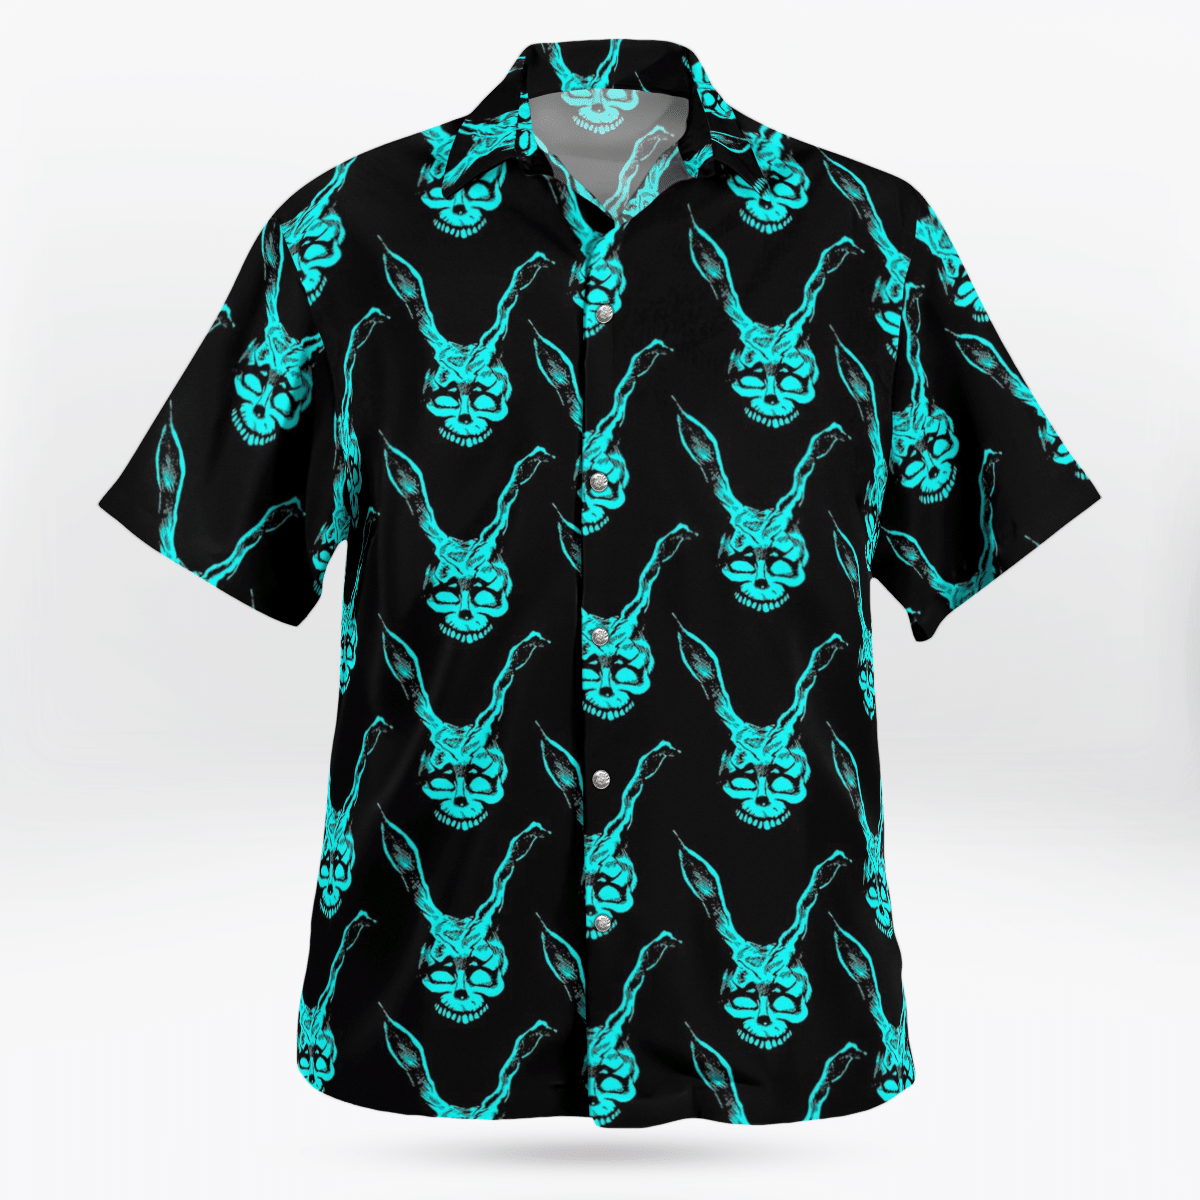 Donnie Darko horror movie Hawaiian shirt 1